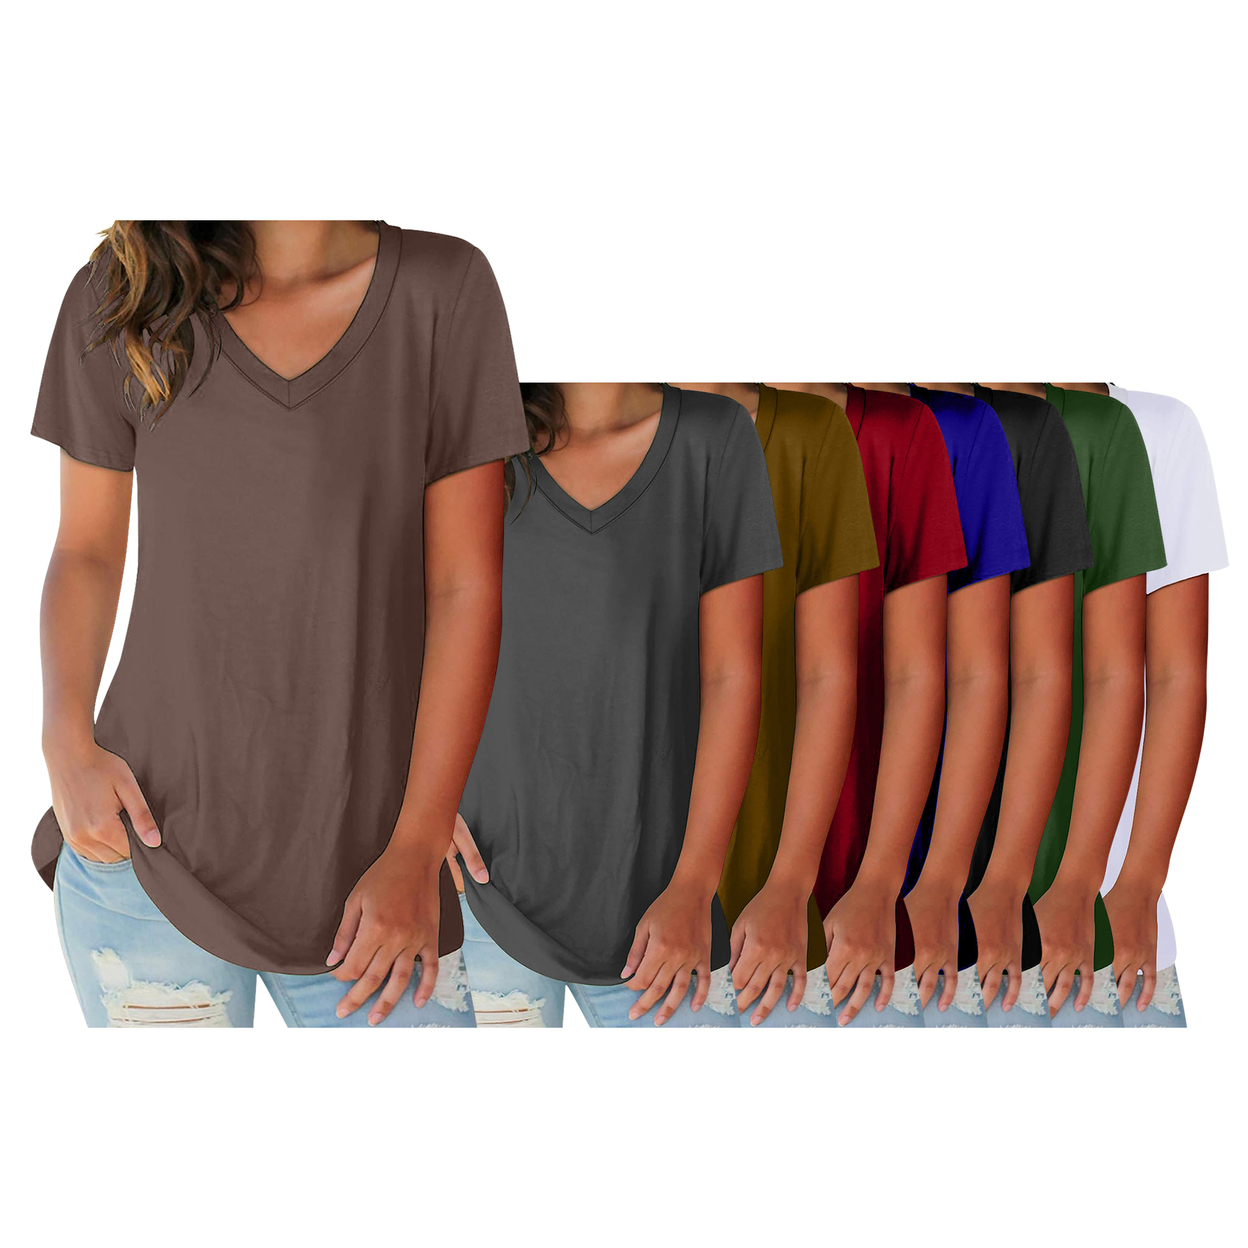 6-Pack: Women's Ultra Soft Smooth Cotton Blend Basic V-Neck Short Sleeve Shirts - X-large